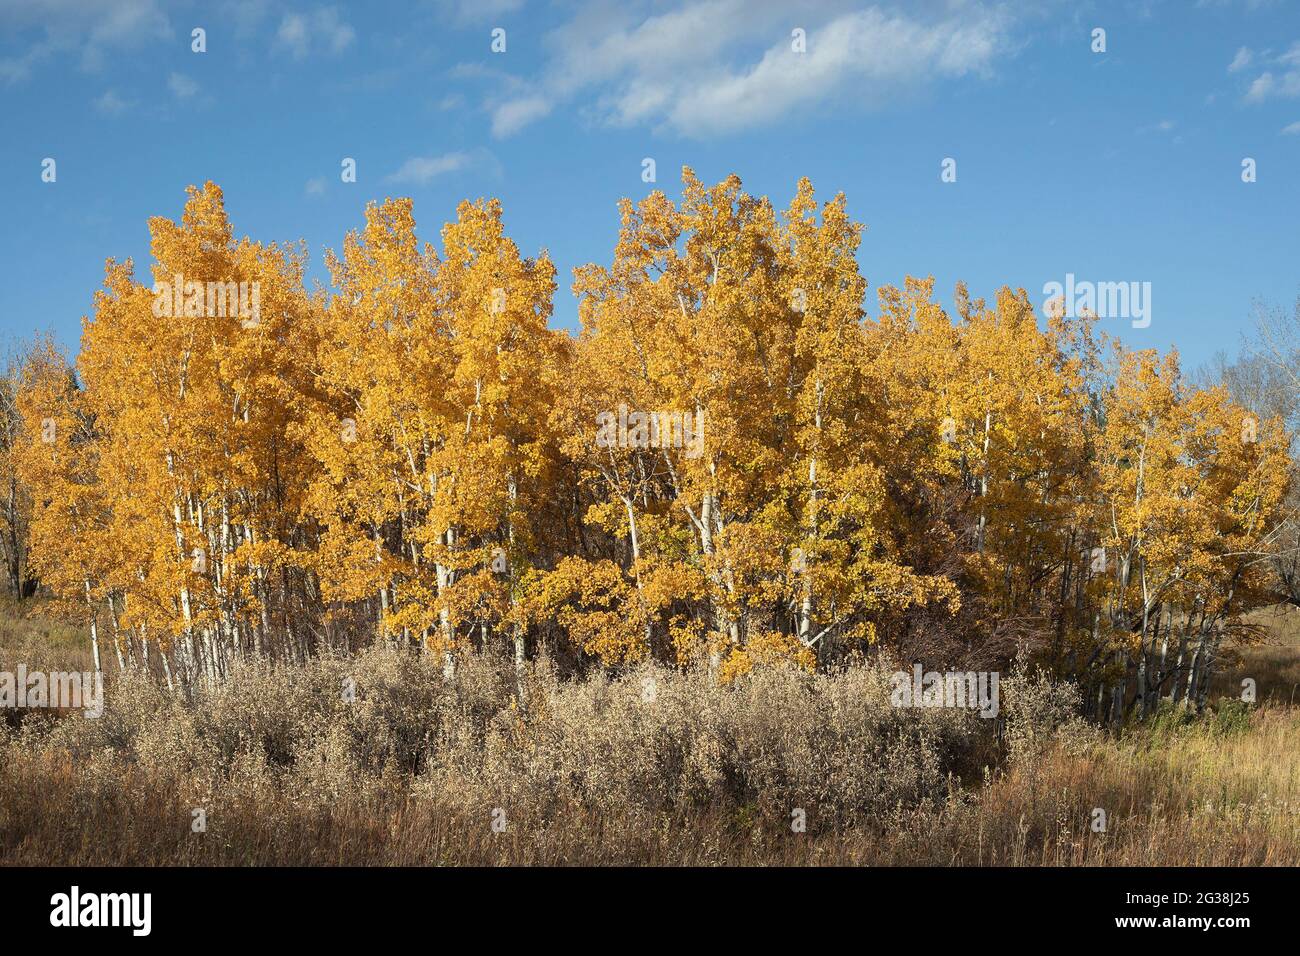 Prairie plant community of golden Trembling Aspen trees (Populus tremuloides), silverberry shrubs (Elaeagnus commutata) and grasses in autumn Stock Photo